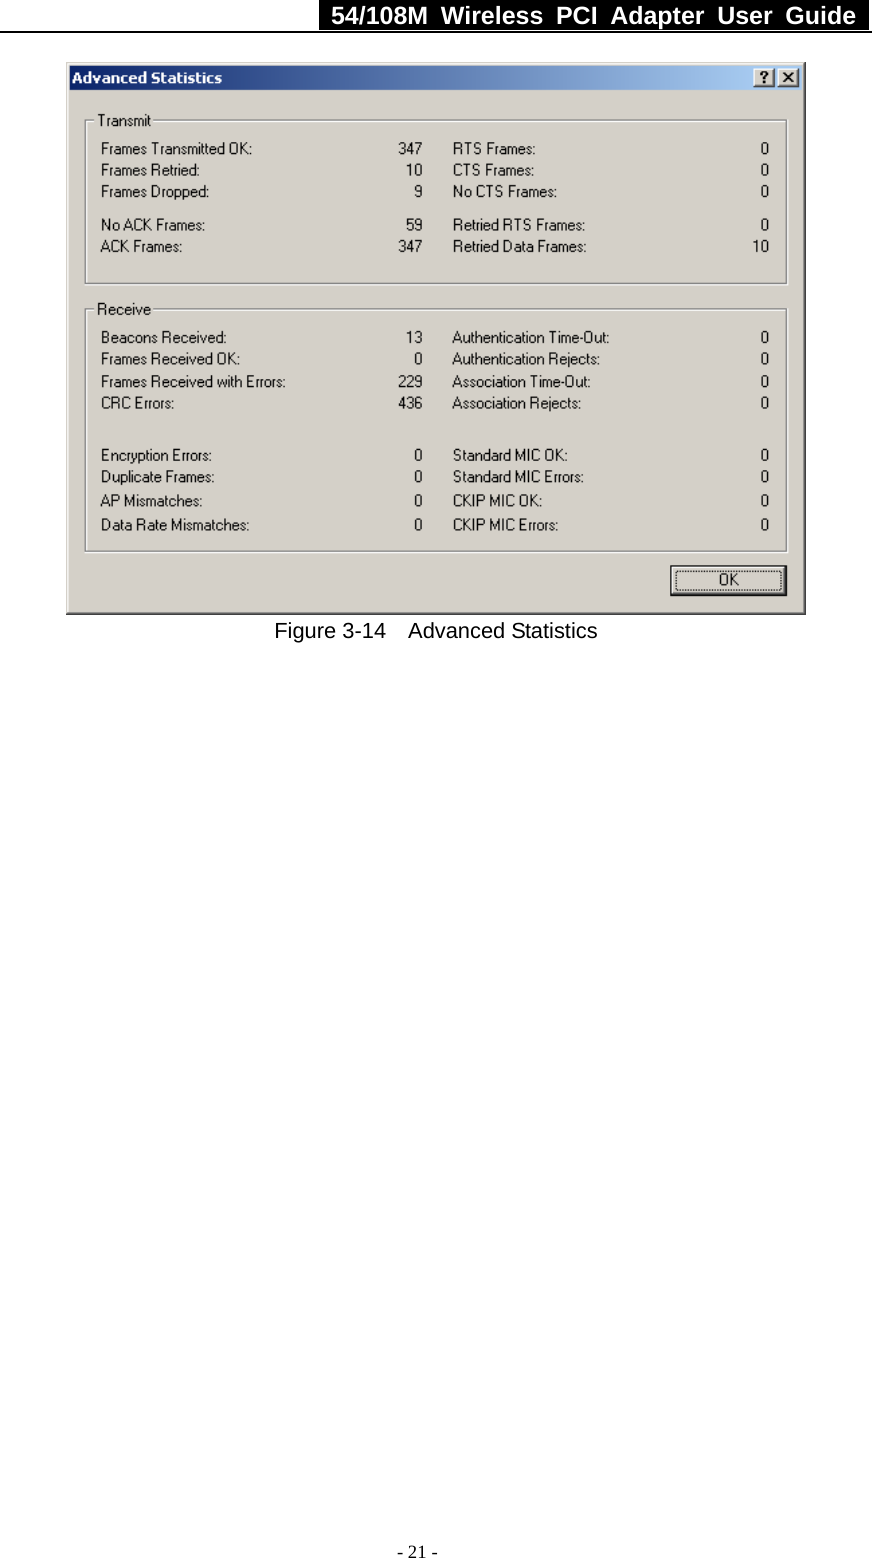   54/108M Wireless PCI Adapter User Guide  - 21 -  Figure 3-14  Advanced Statistics 